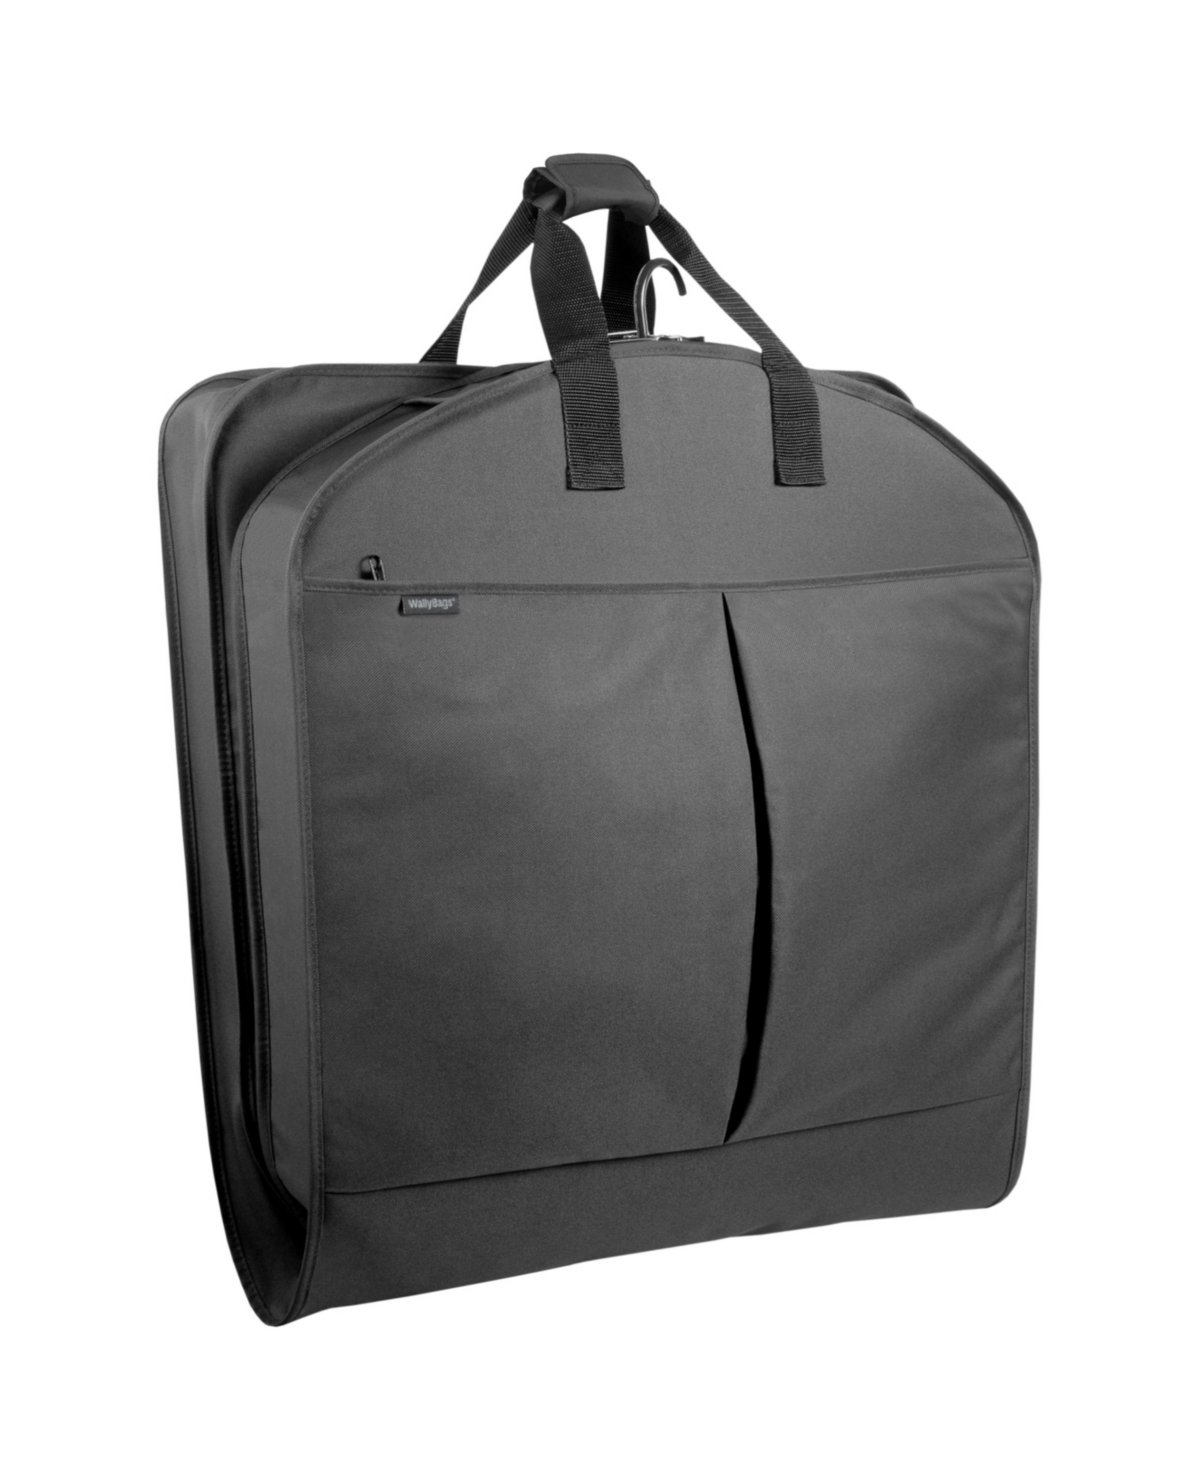 40" Deluxe Travel Garment Bag with Pockets - Merlot